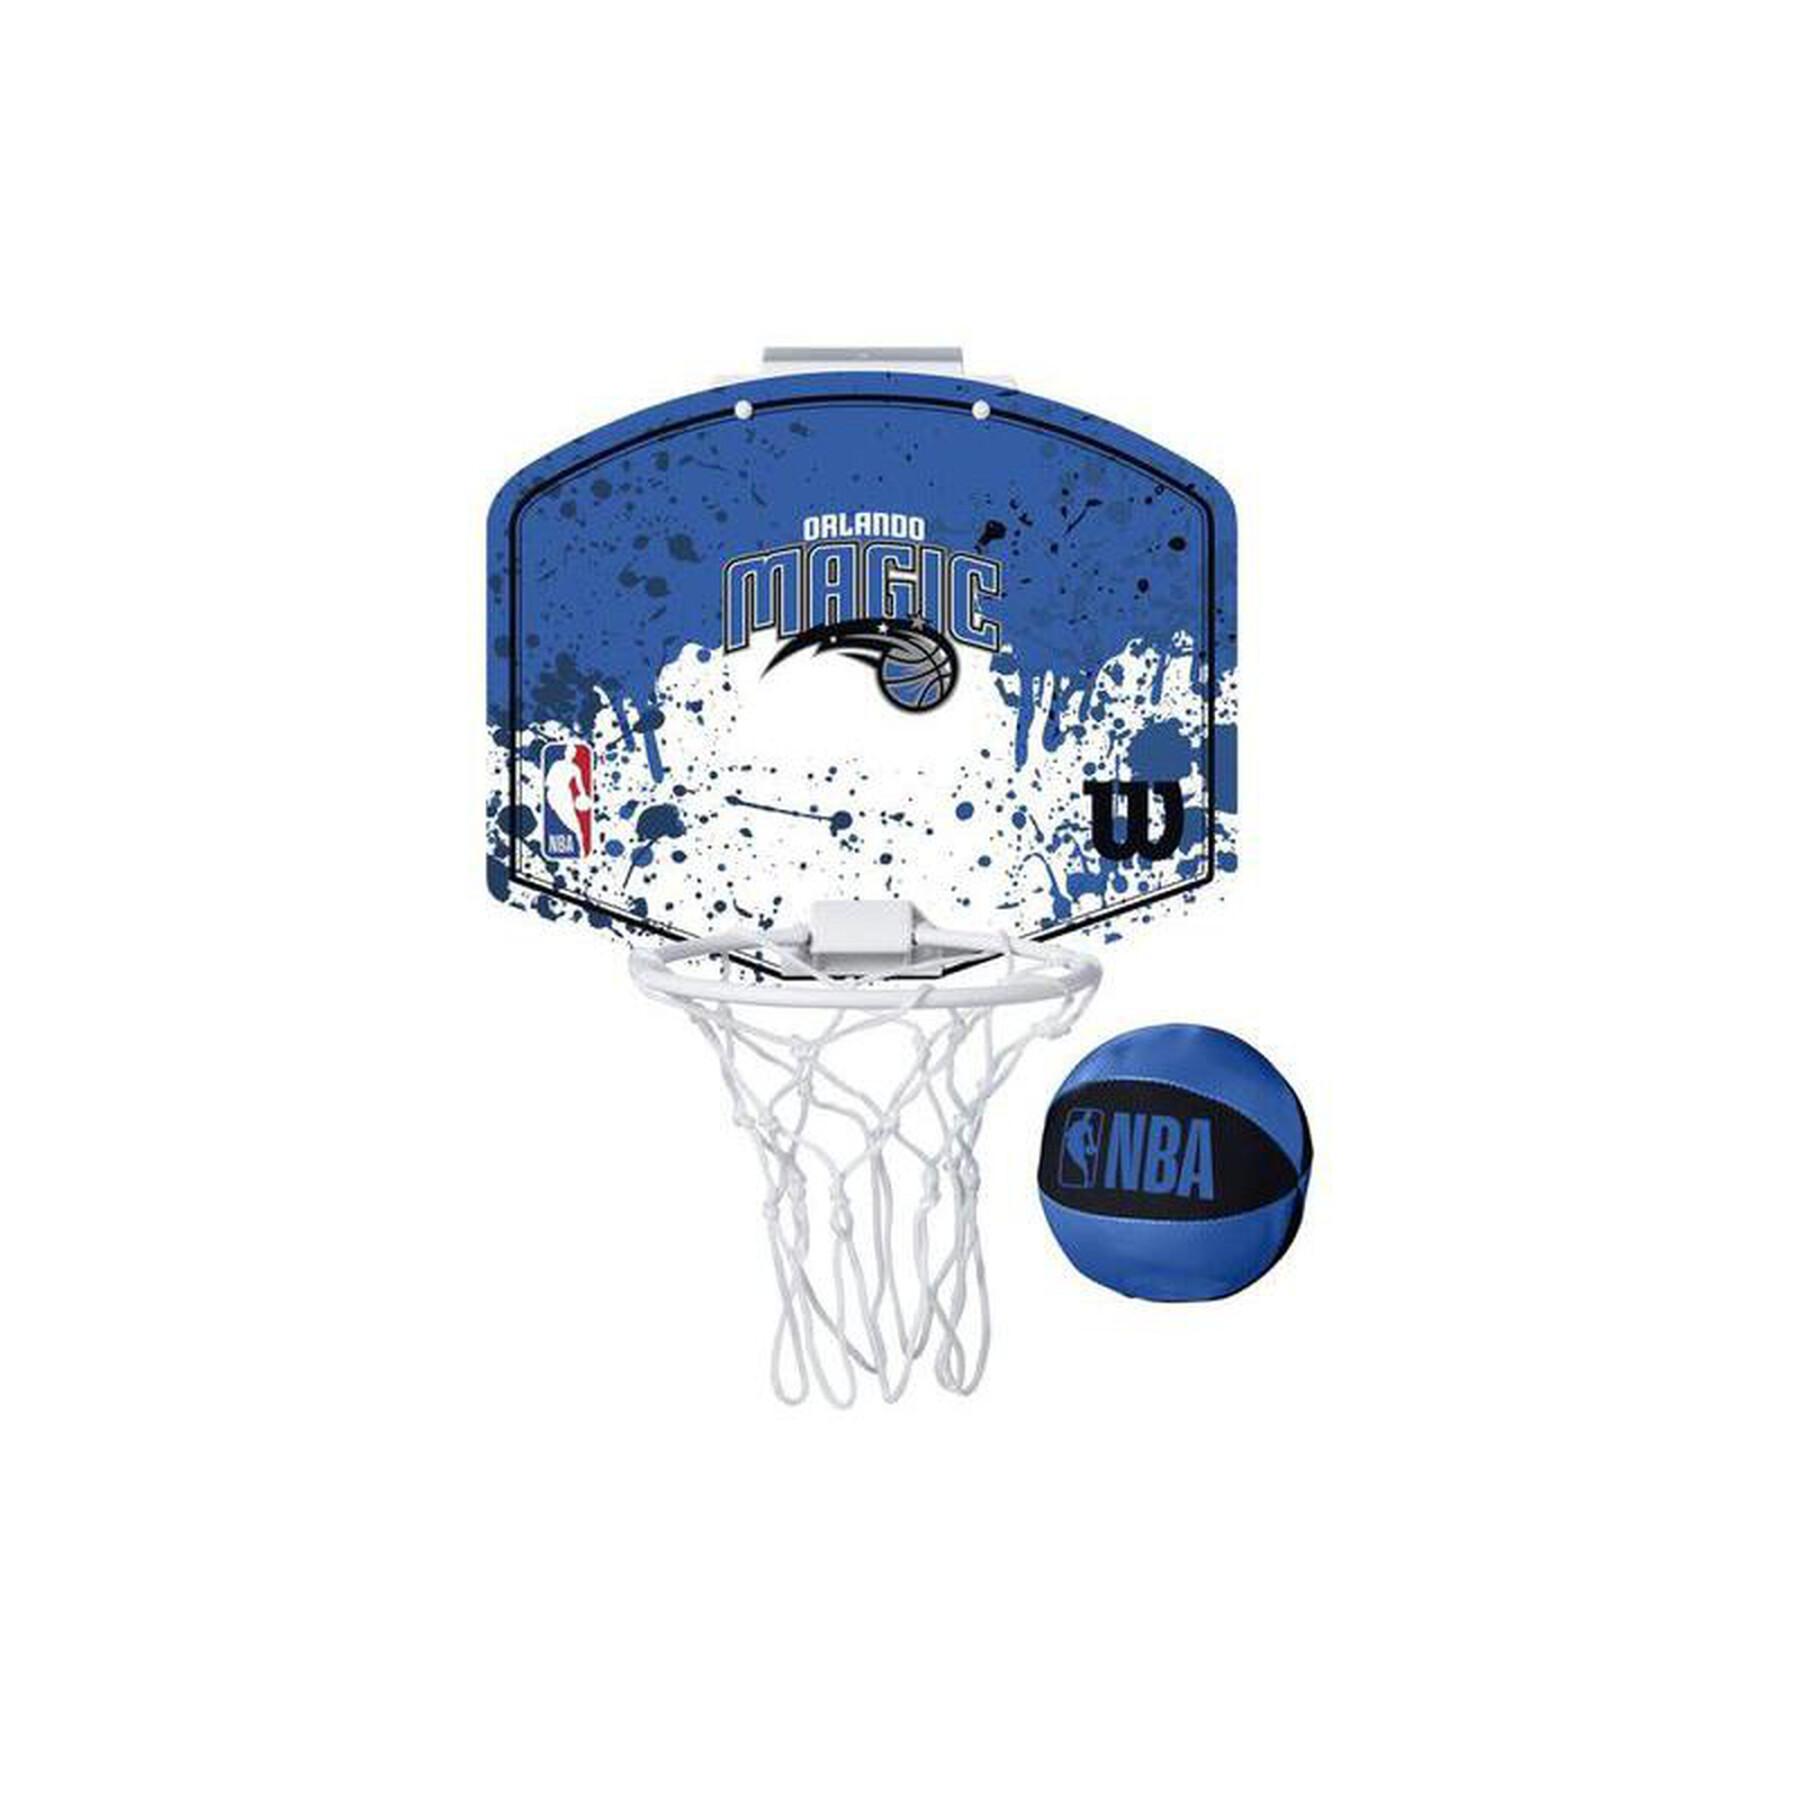 Mini NBA Basketballkorb Orlando Magic